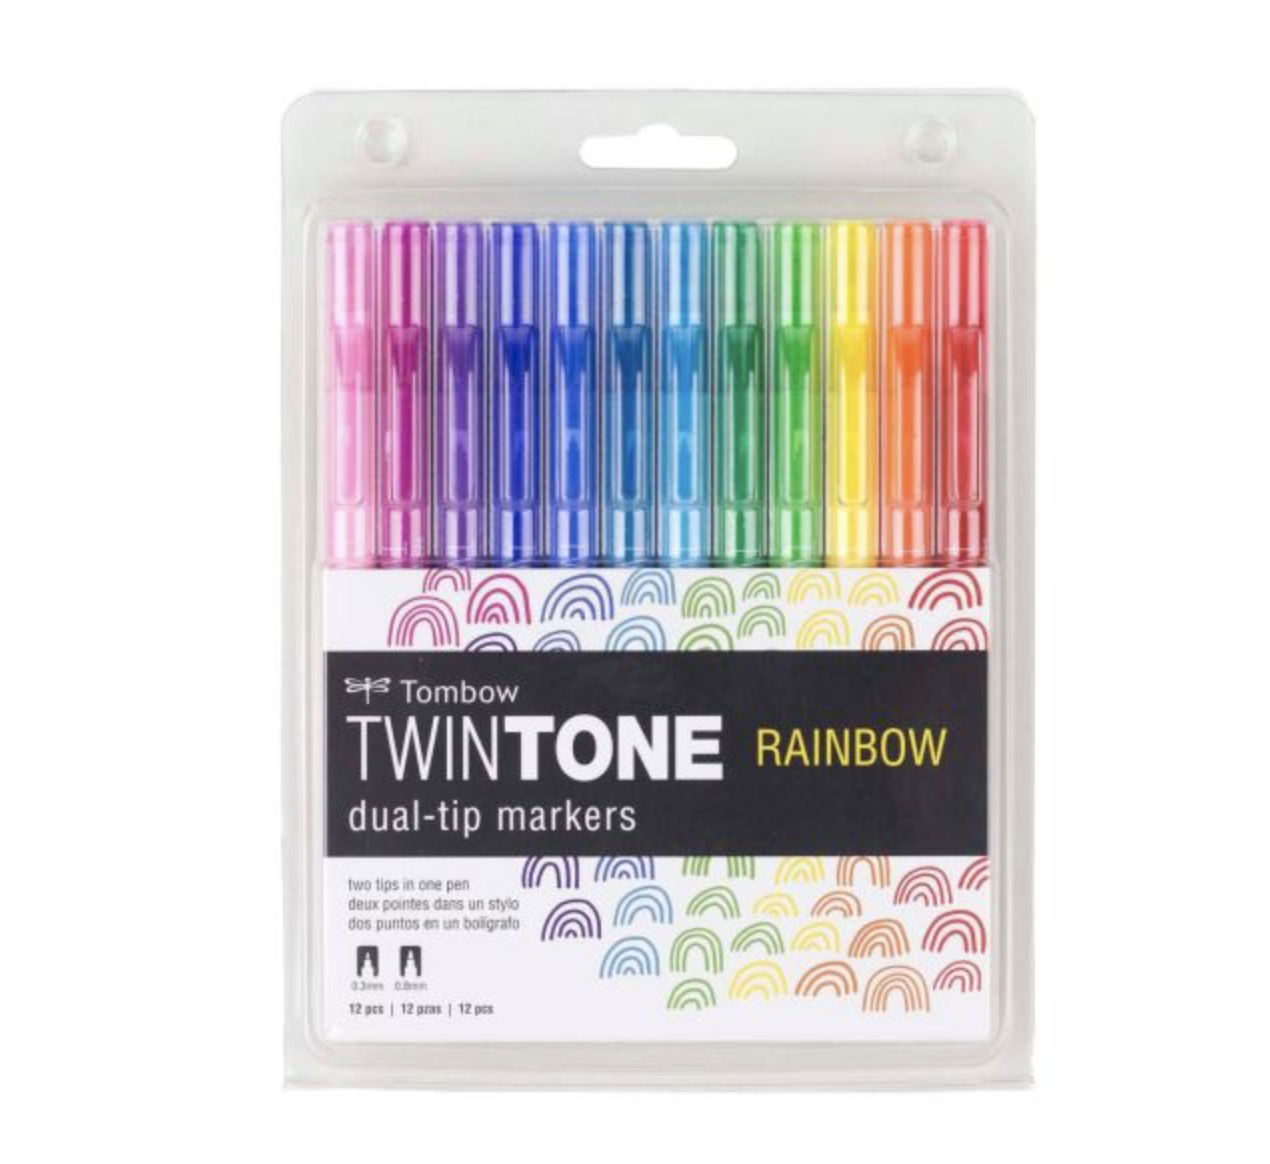 TwinTone Rainbow